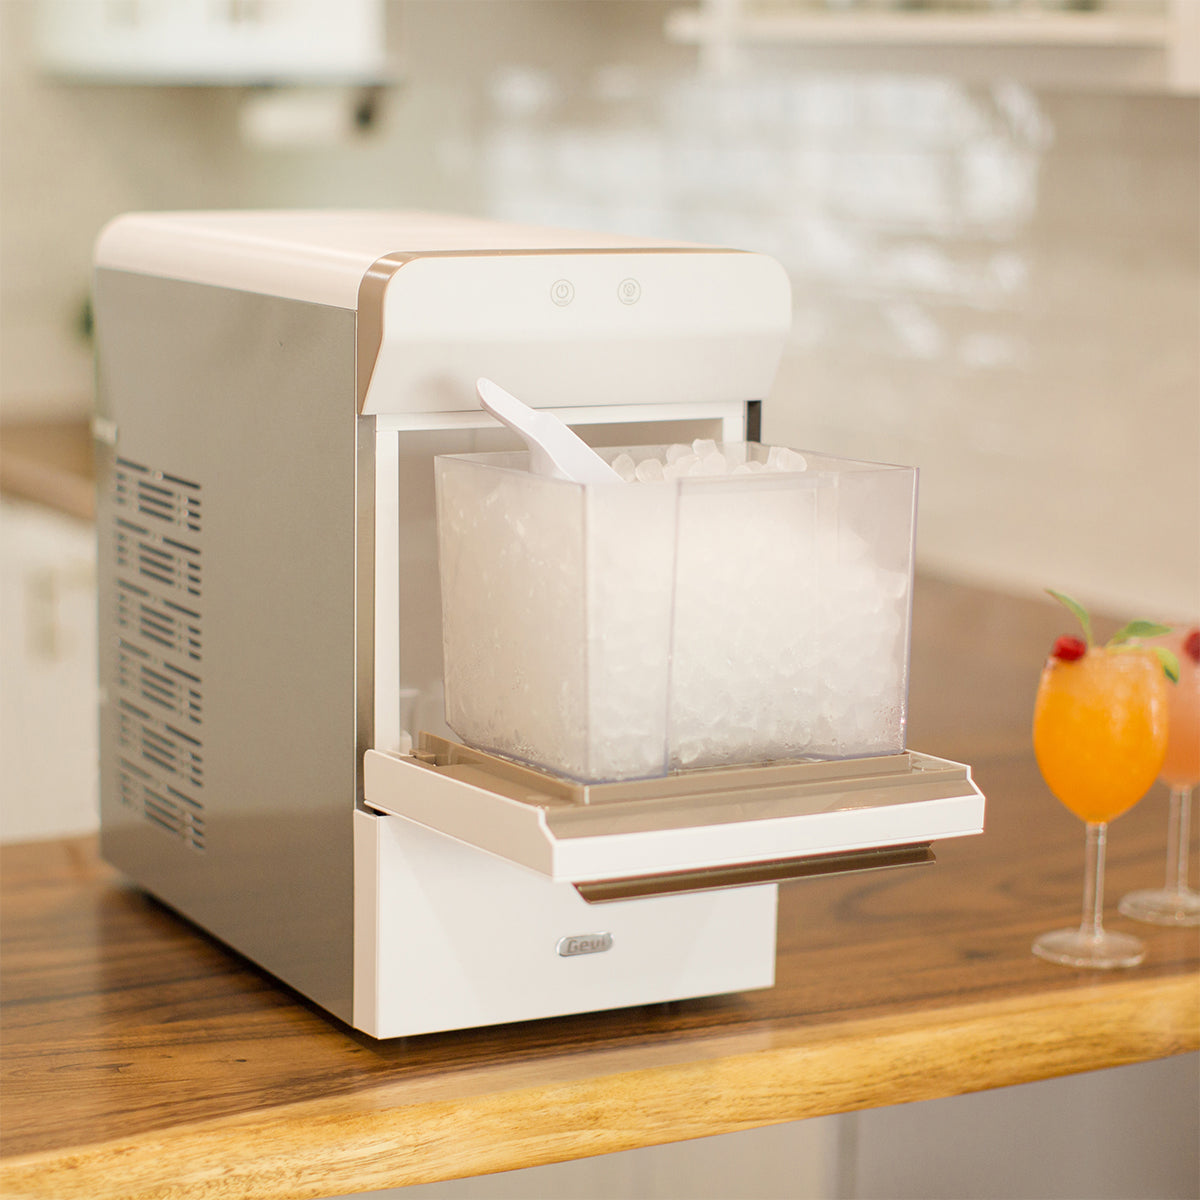 Gevi Household Countertop Nugget Ice Maker V2.0